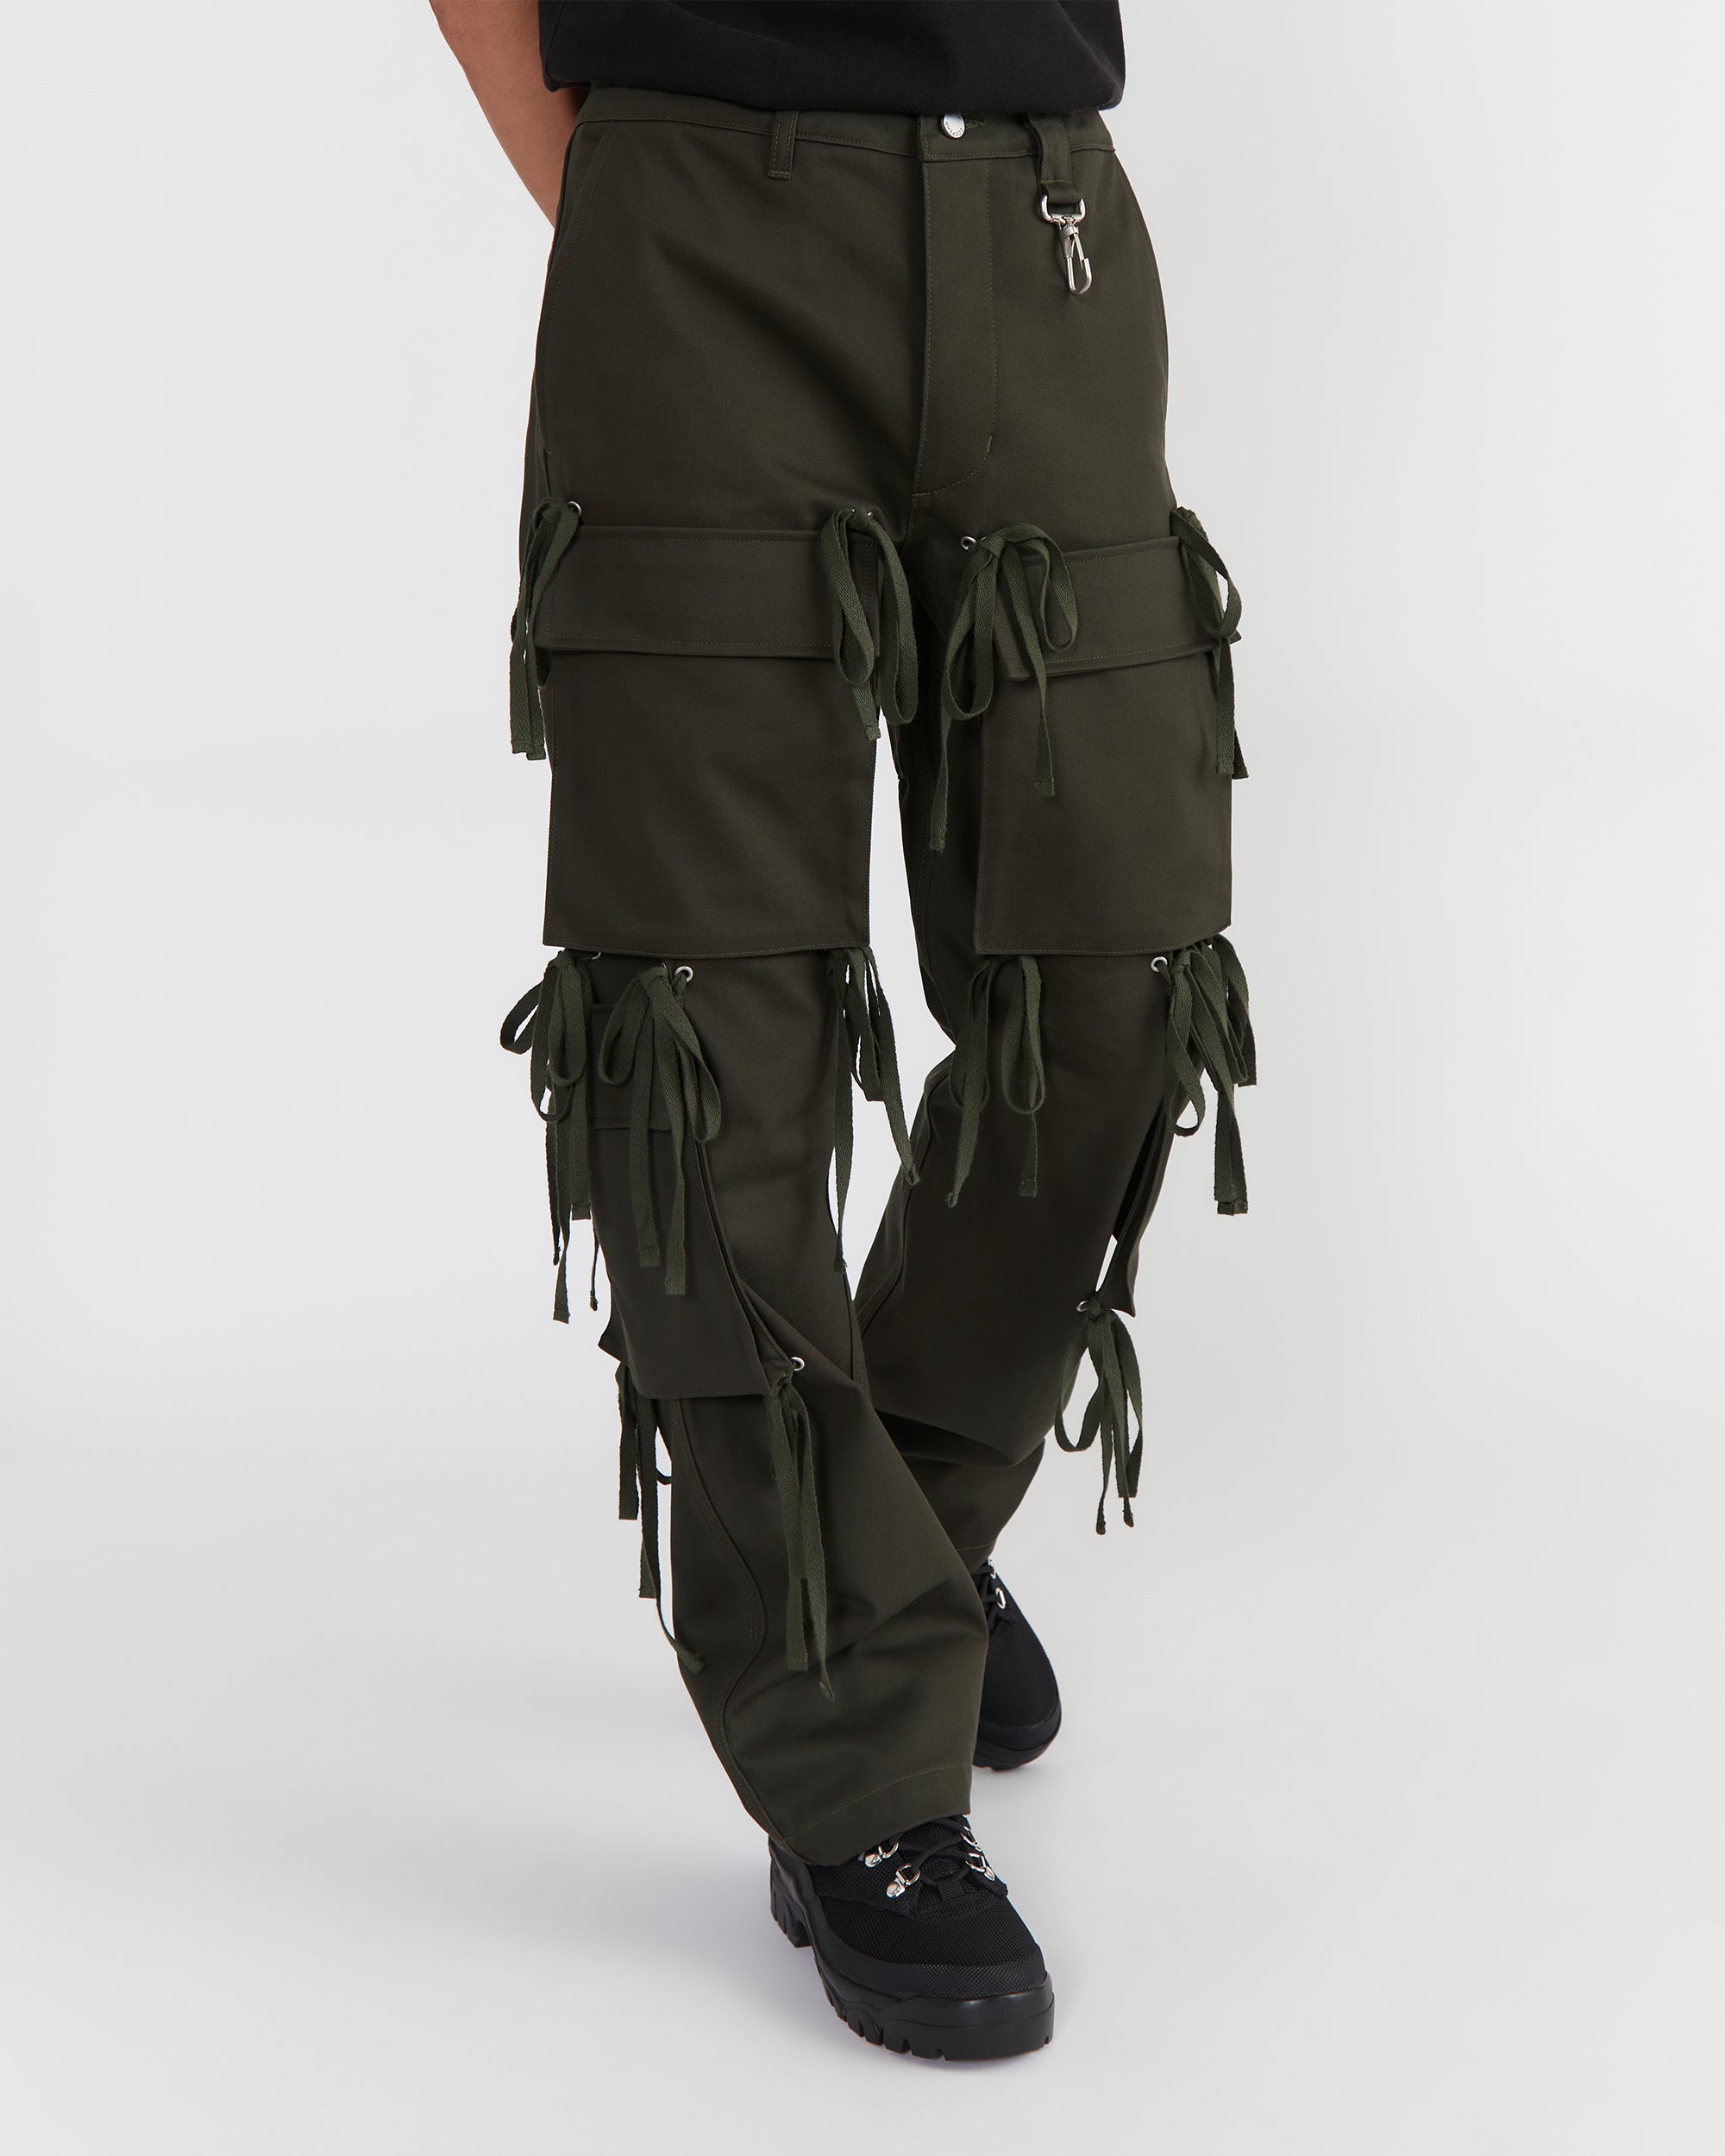 2-Pack Men's Belted Slim Fit Cotton Cargo Pocket Pants (Multiple Inseams)